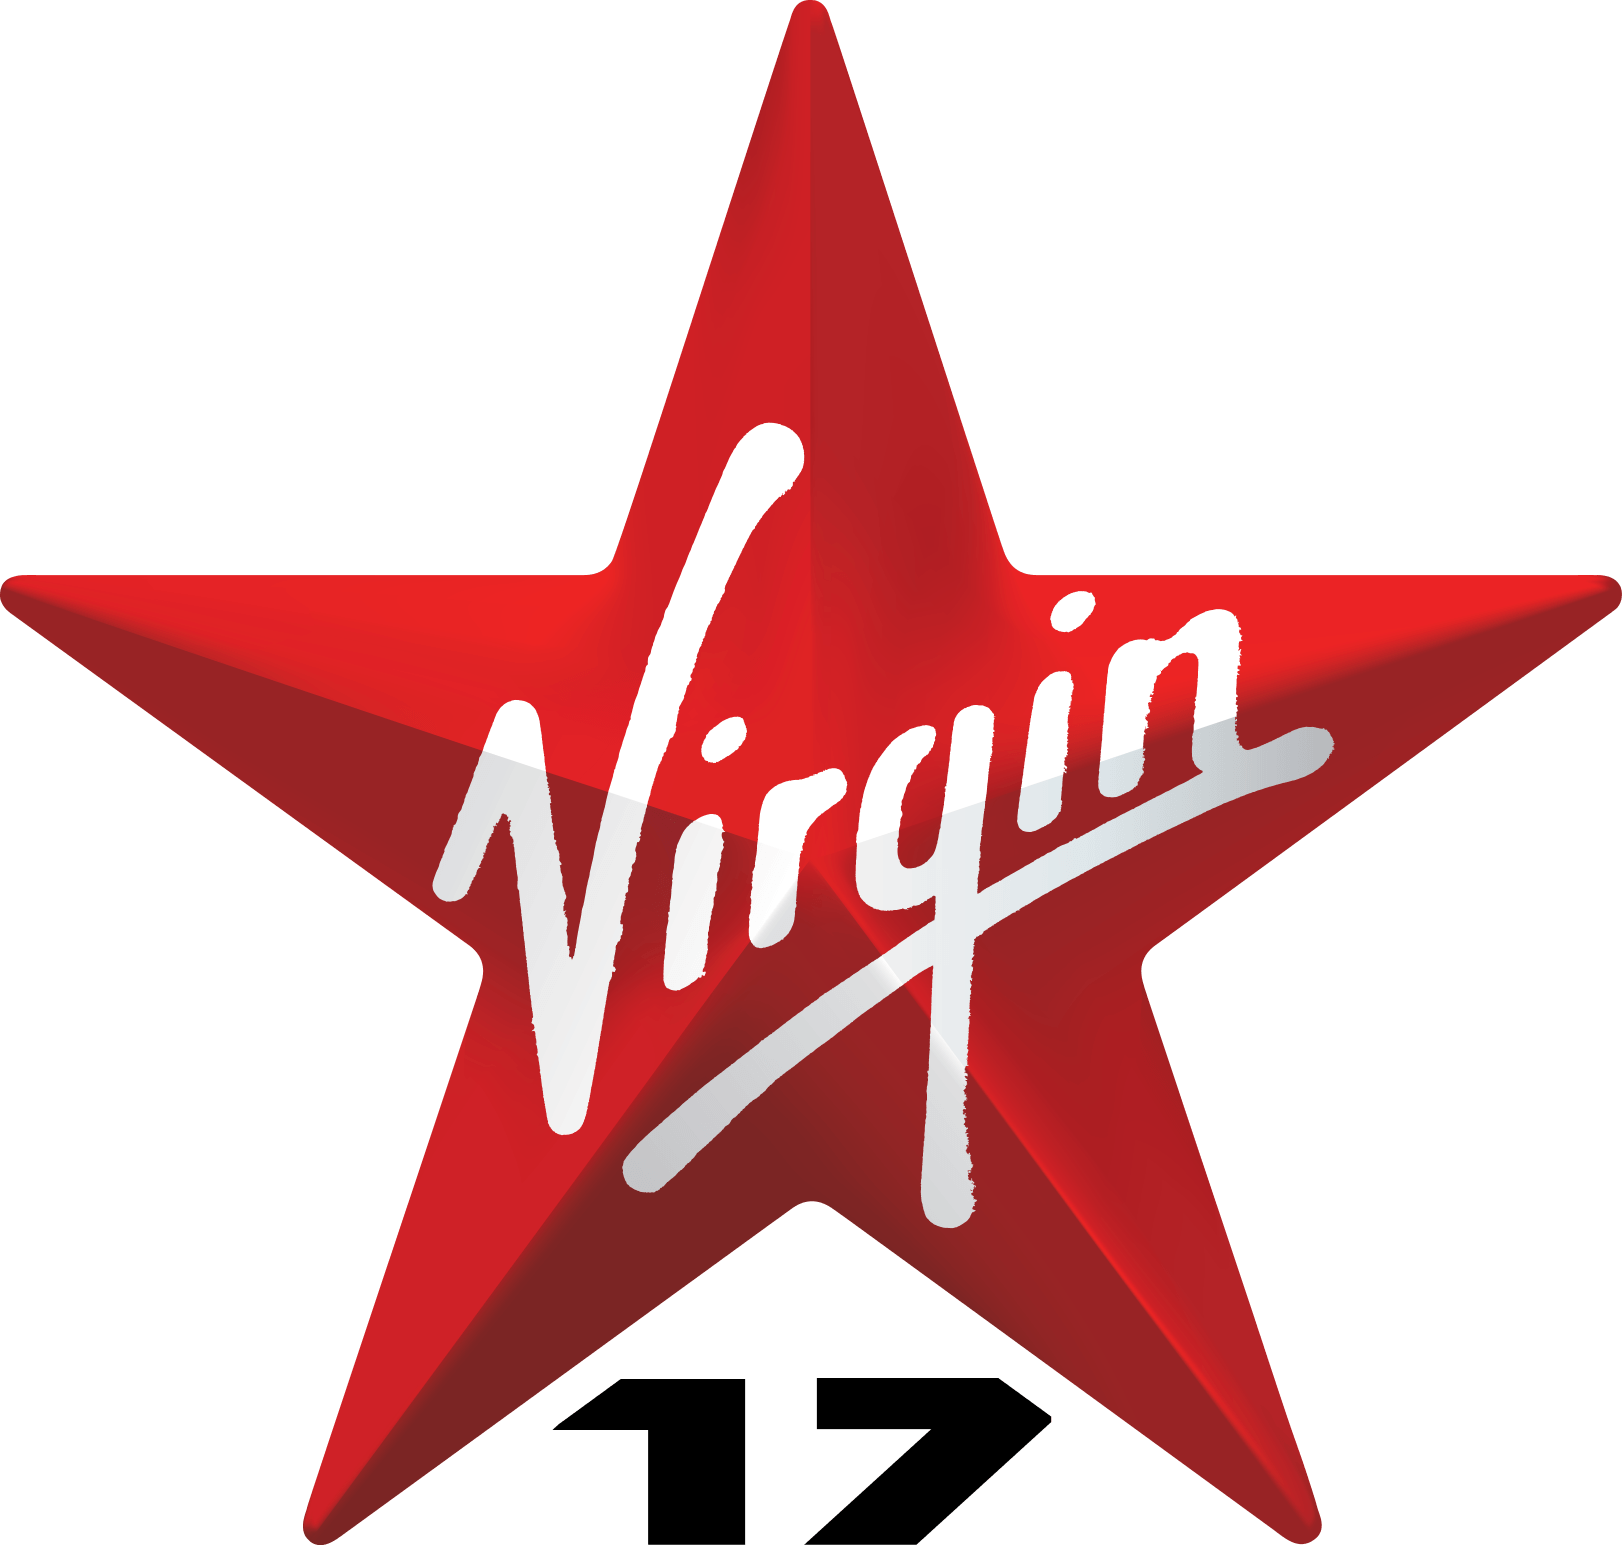 17 Logo - Image - Virgin 17 logo.png | Logopedia | FANDOM powered by Wikia